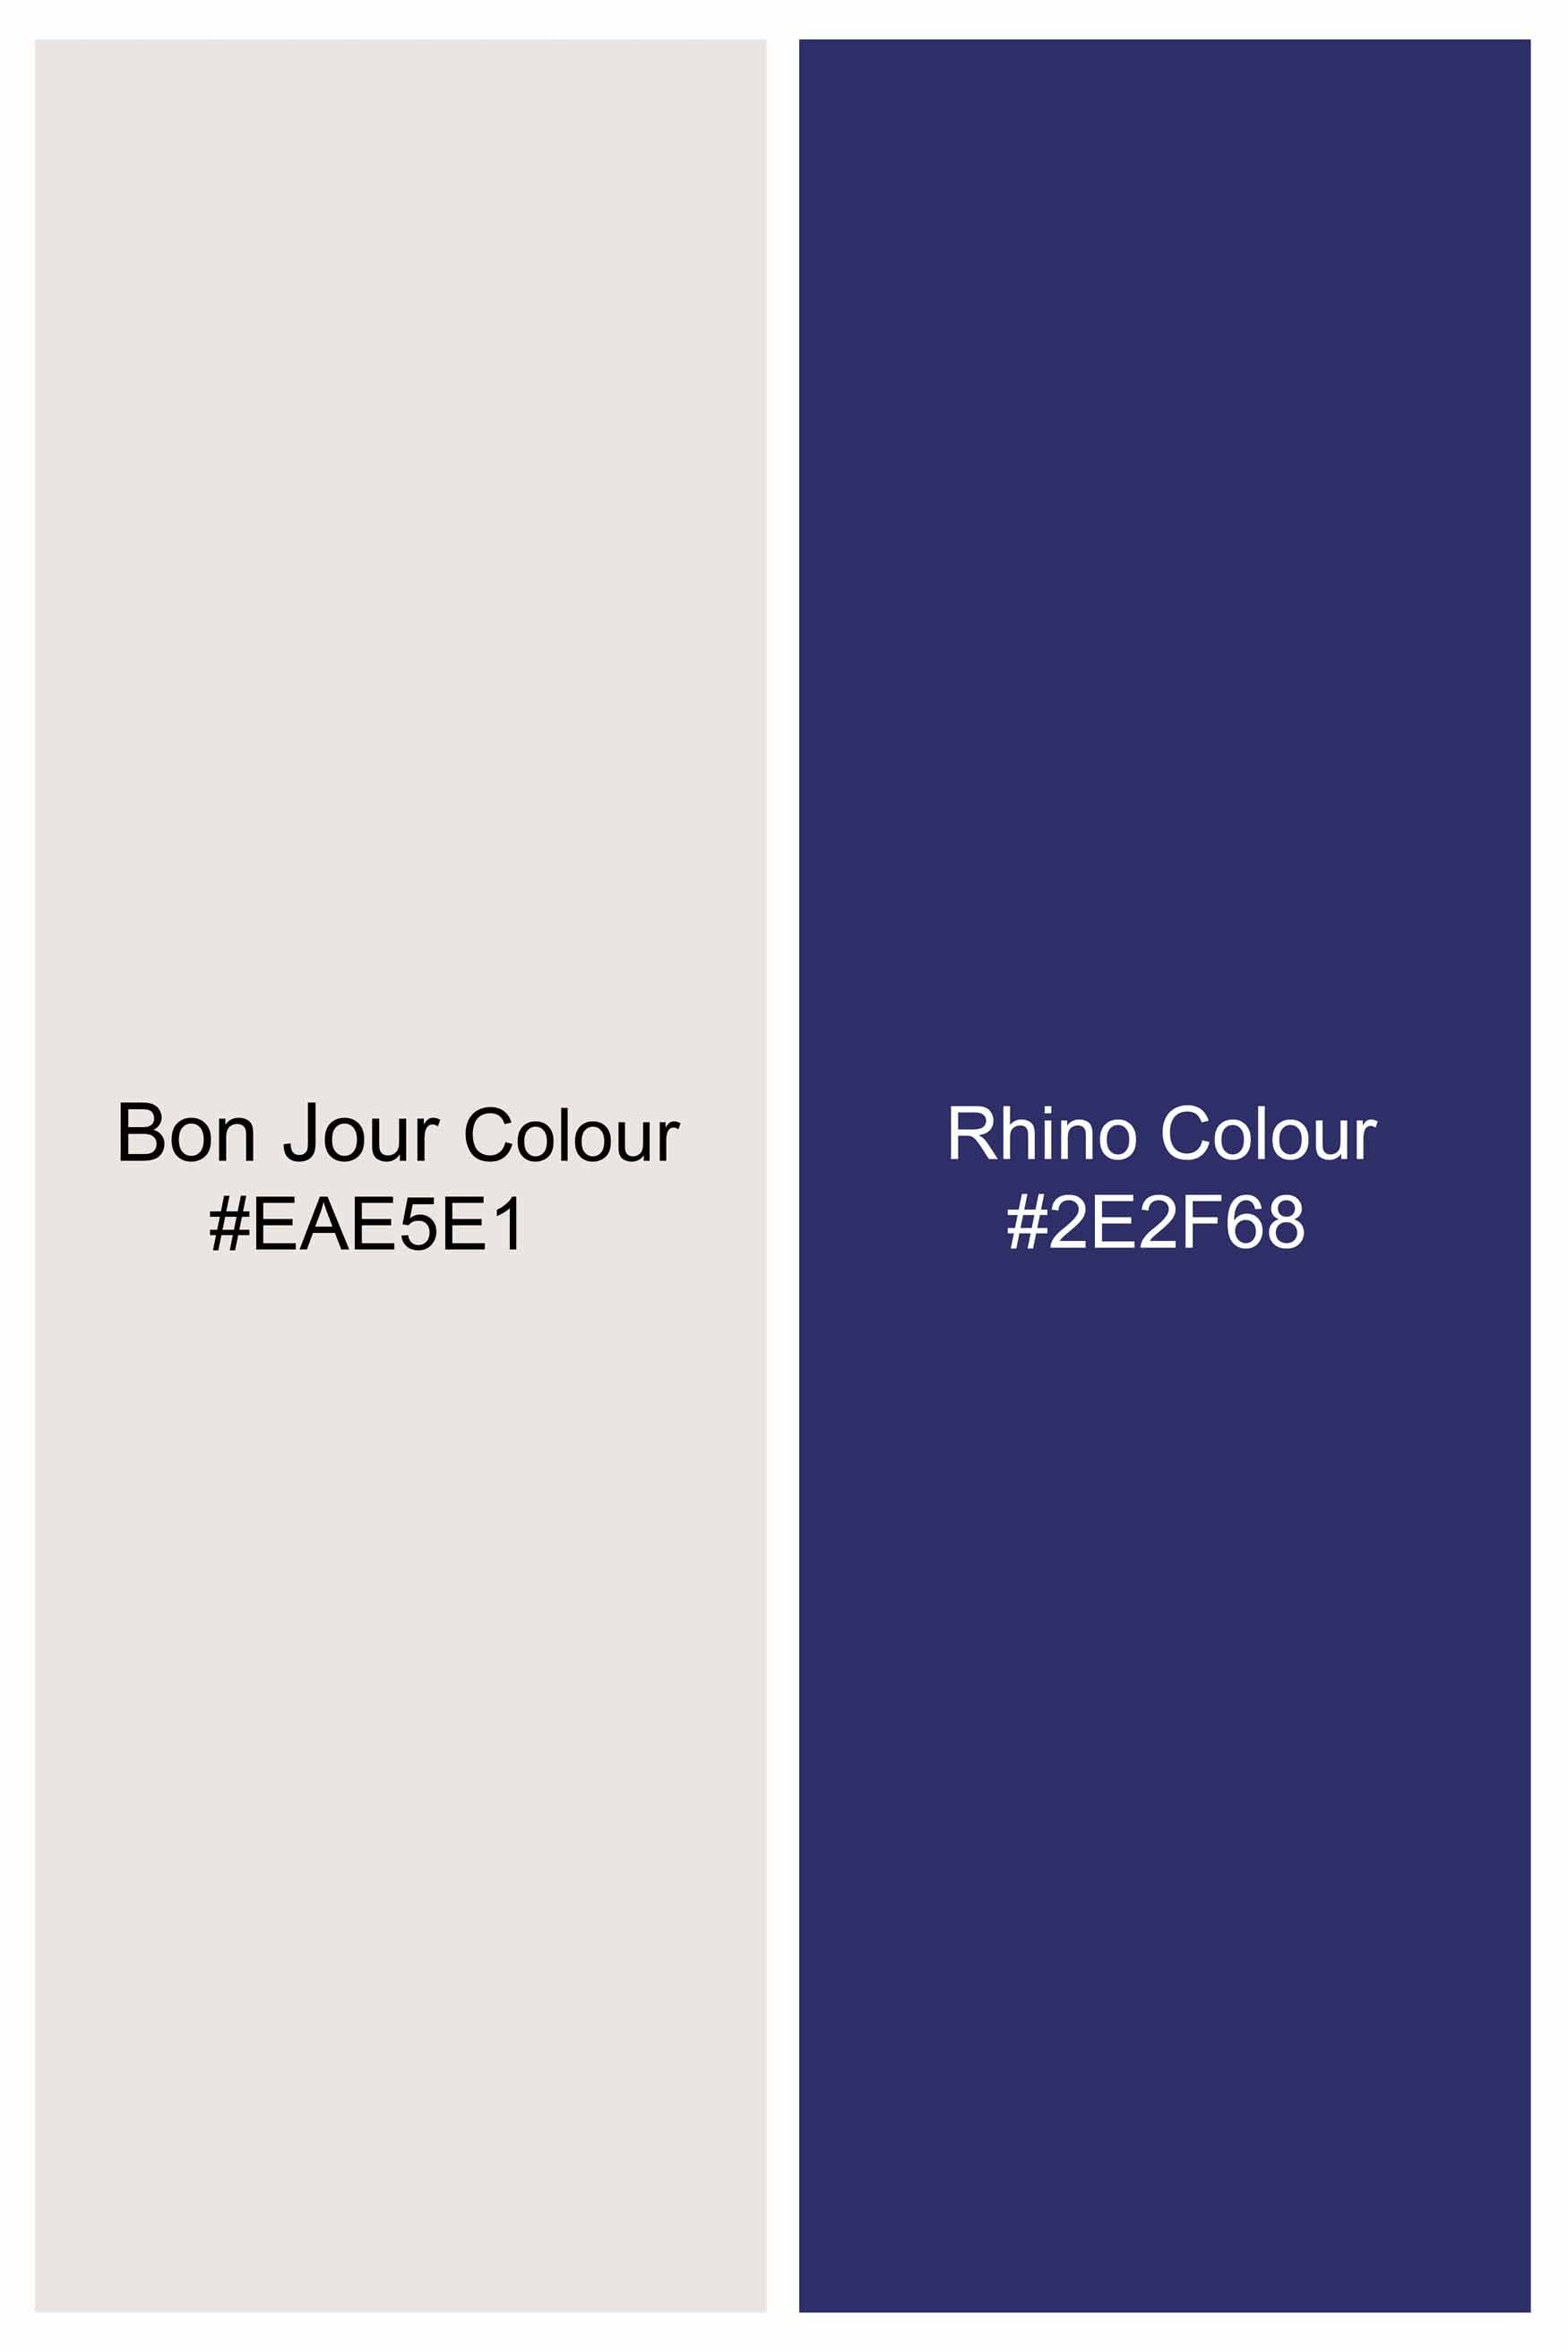 Bon Jour Cream and Rhino Blue Ditsy Printed Royal Oxford Shirt 11406-38, 11406-H-38, 11406-39, 11406-H-39, 11406-40, 11406-H-40, 11406-42, 11406-H-42, 11406-44, 11406-H-44, 11406-46, 11406-H-46, 11406-48, 11406-H-48, 11406-50, 11406-H-50, 11406-52, 11406-H-52